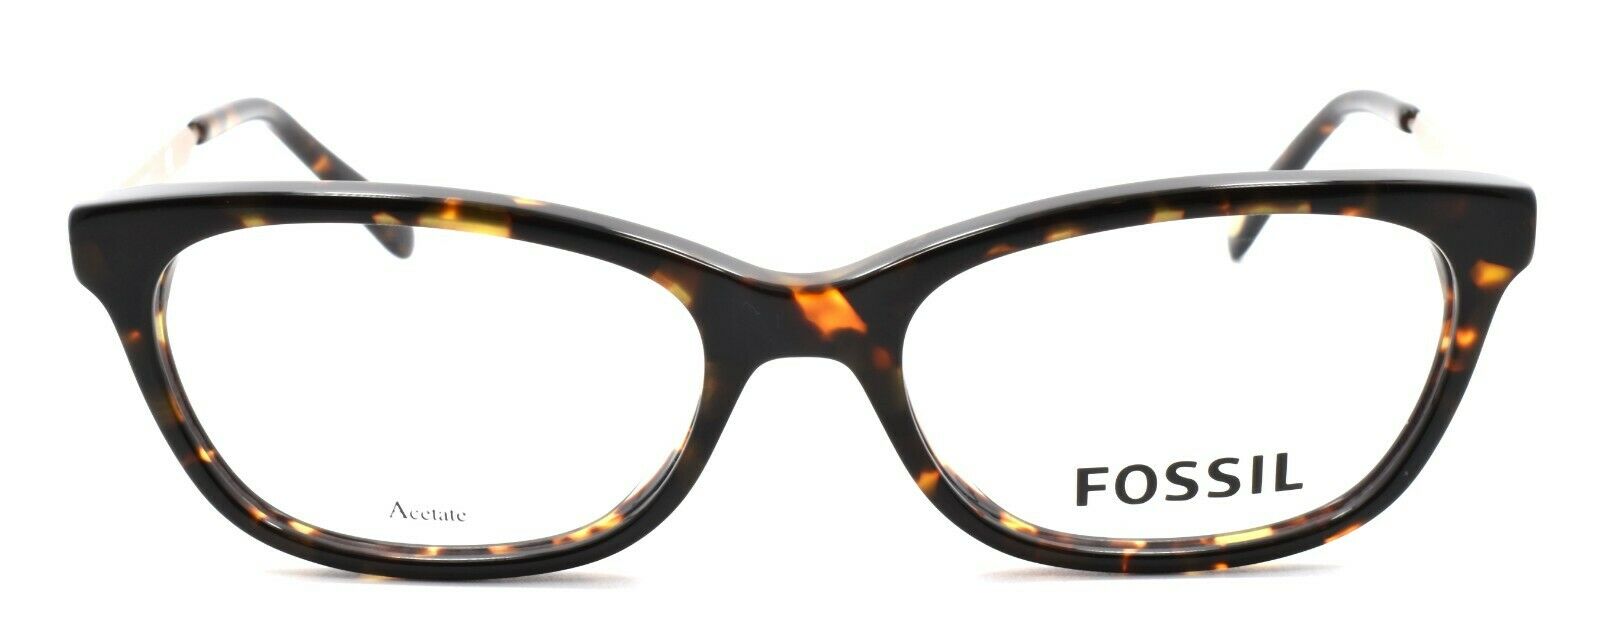 2-Fossil FOS 7010 086 Women's Eyeglasses Frames 51-17-140 Dark Havana + CASE-762753342225-IKSpecs